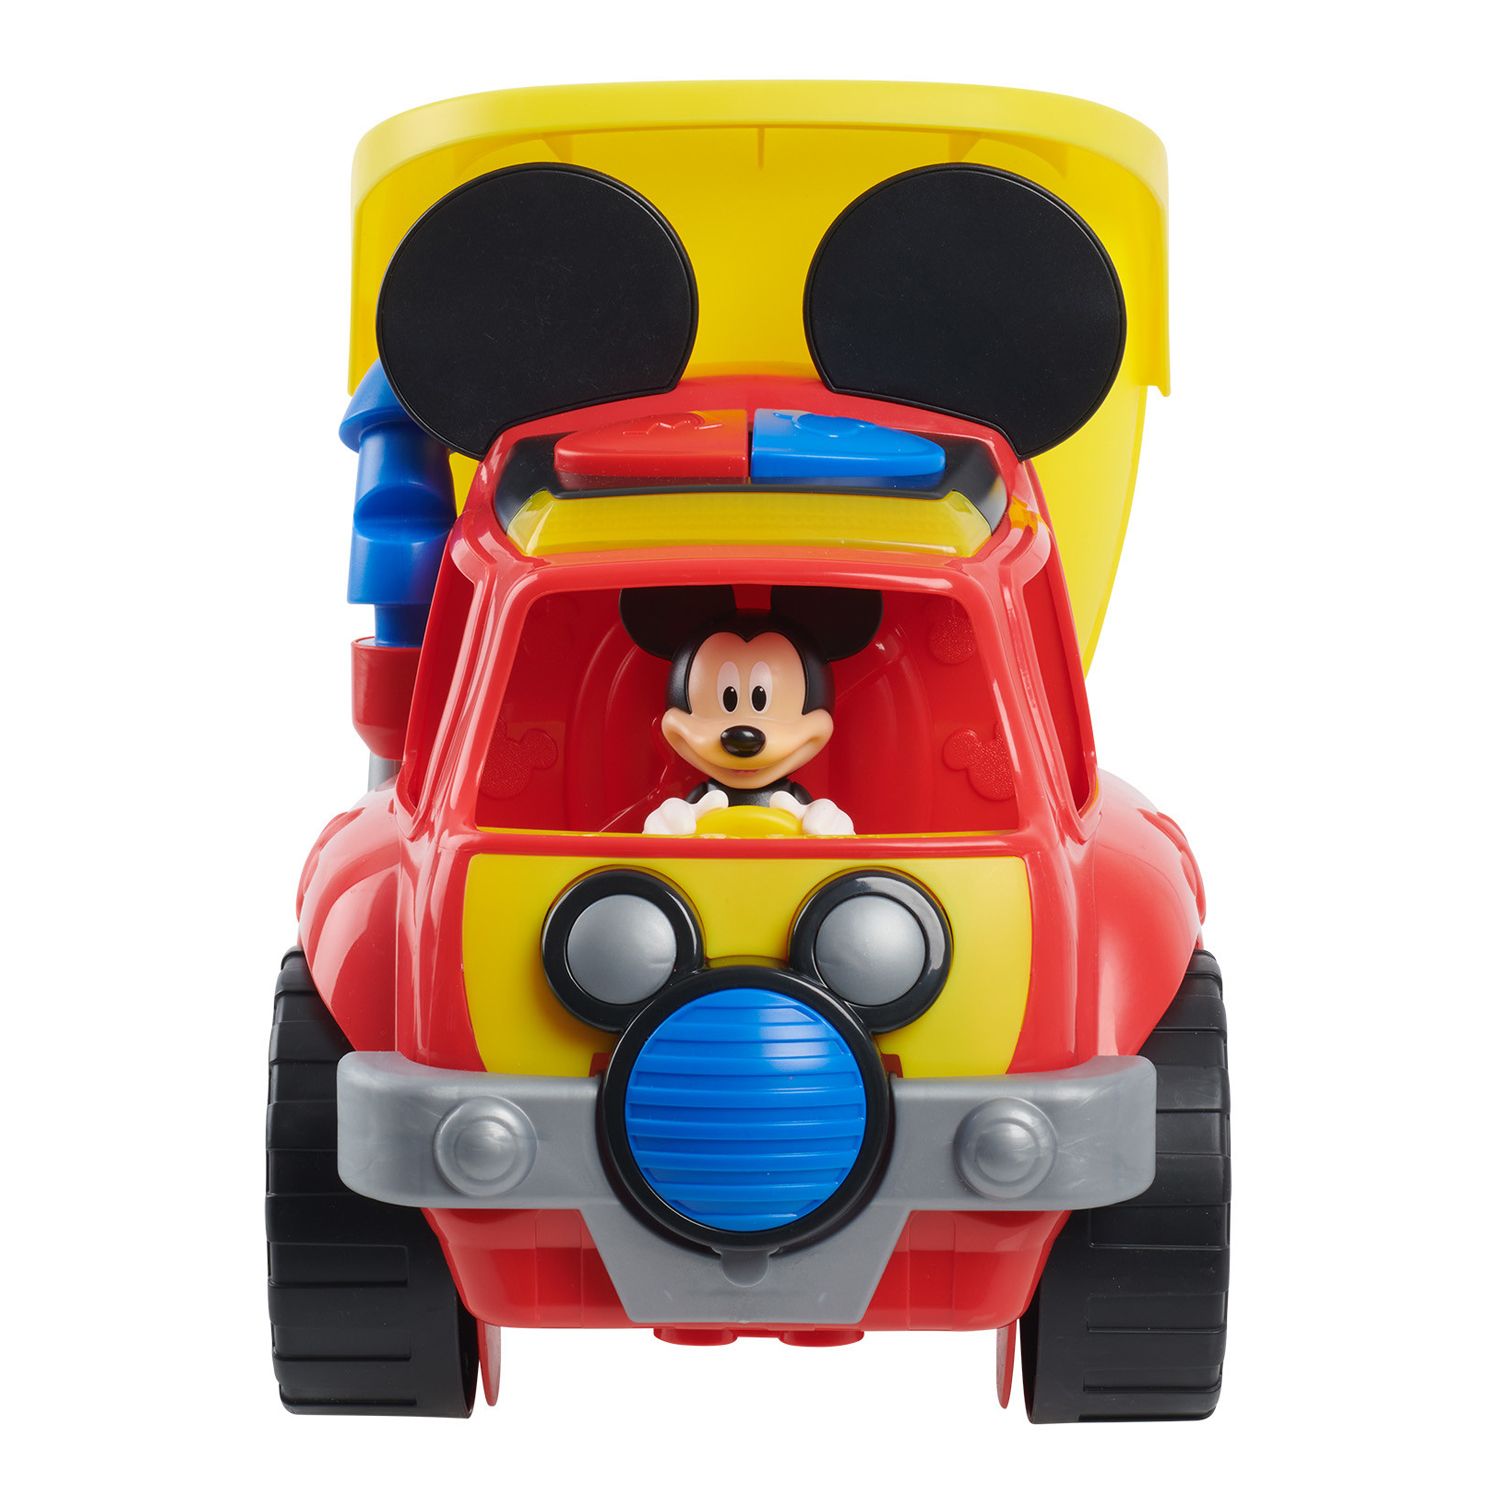 Image for Disney Junior Mickey Mouse Wacky Wheeler Dump Truck at Kohl's.